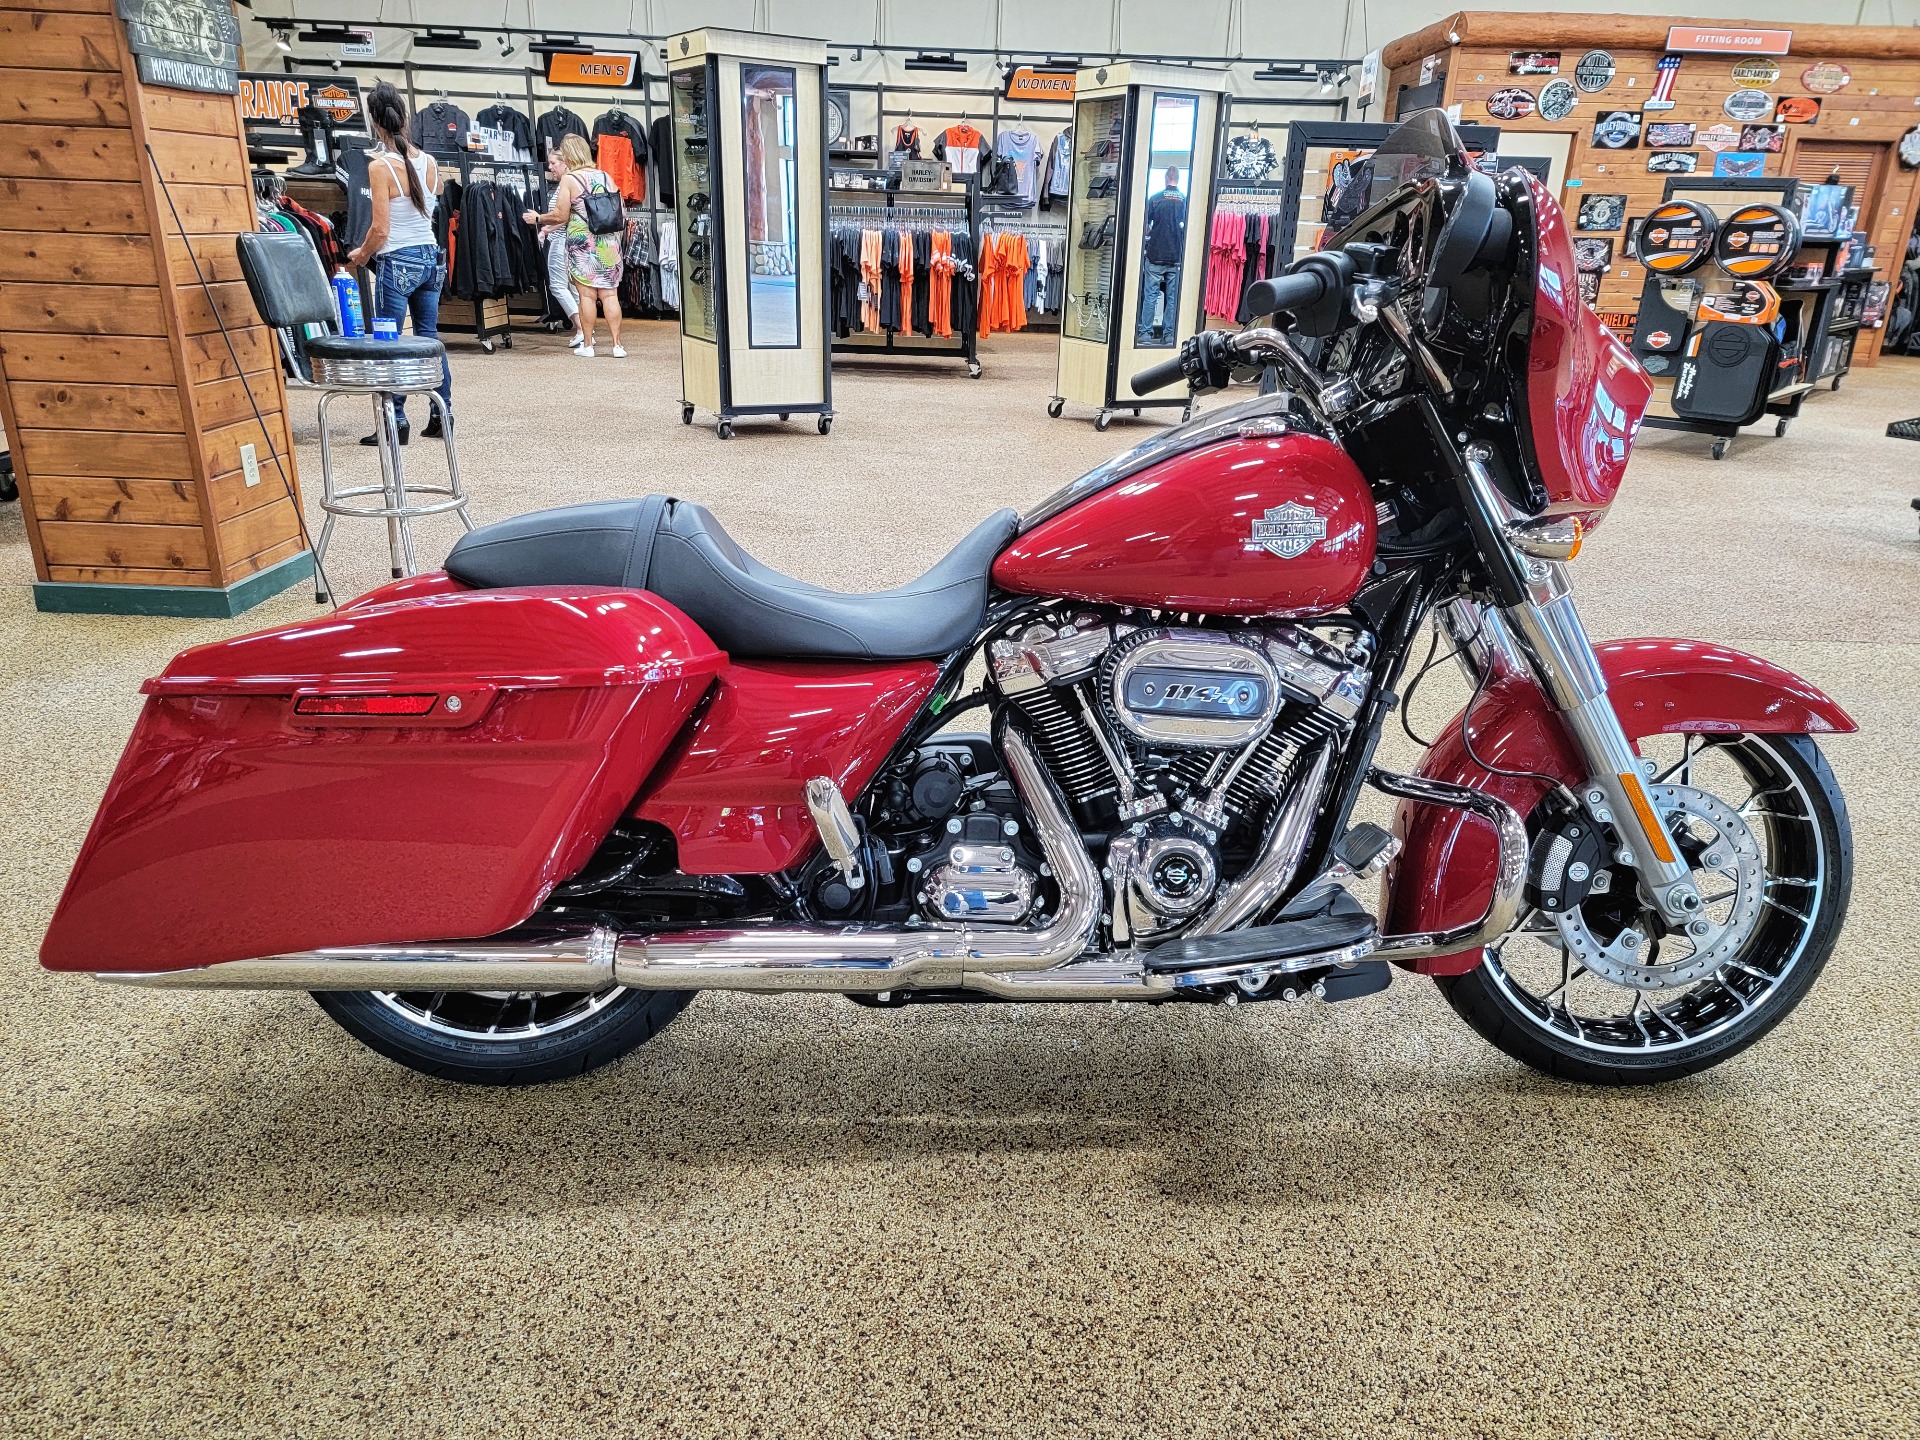 2021 Harley-Davidson Street Glide® Special in Sauk Rapids, Minnesota - Photo 1